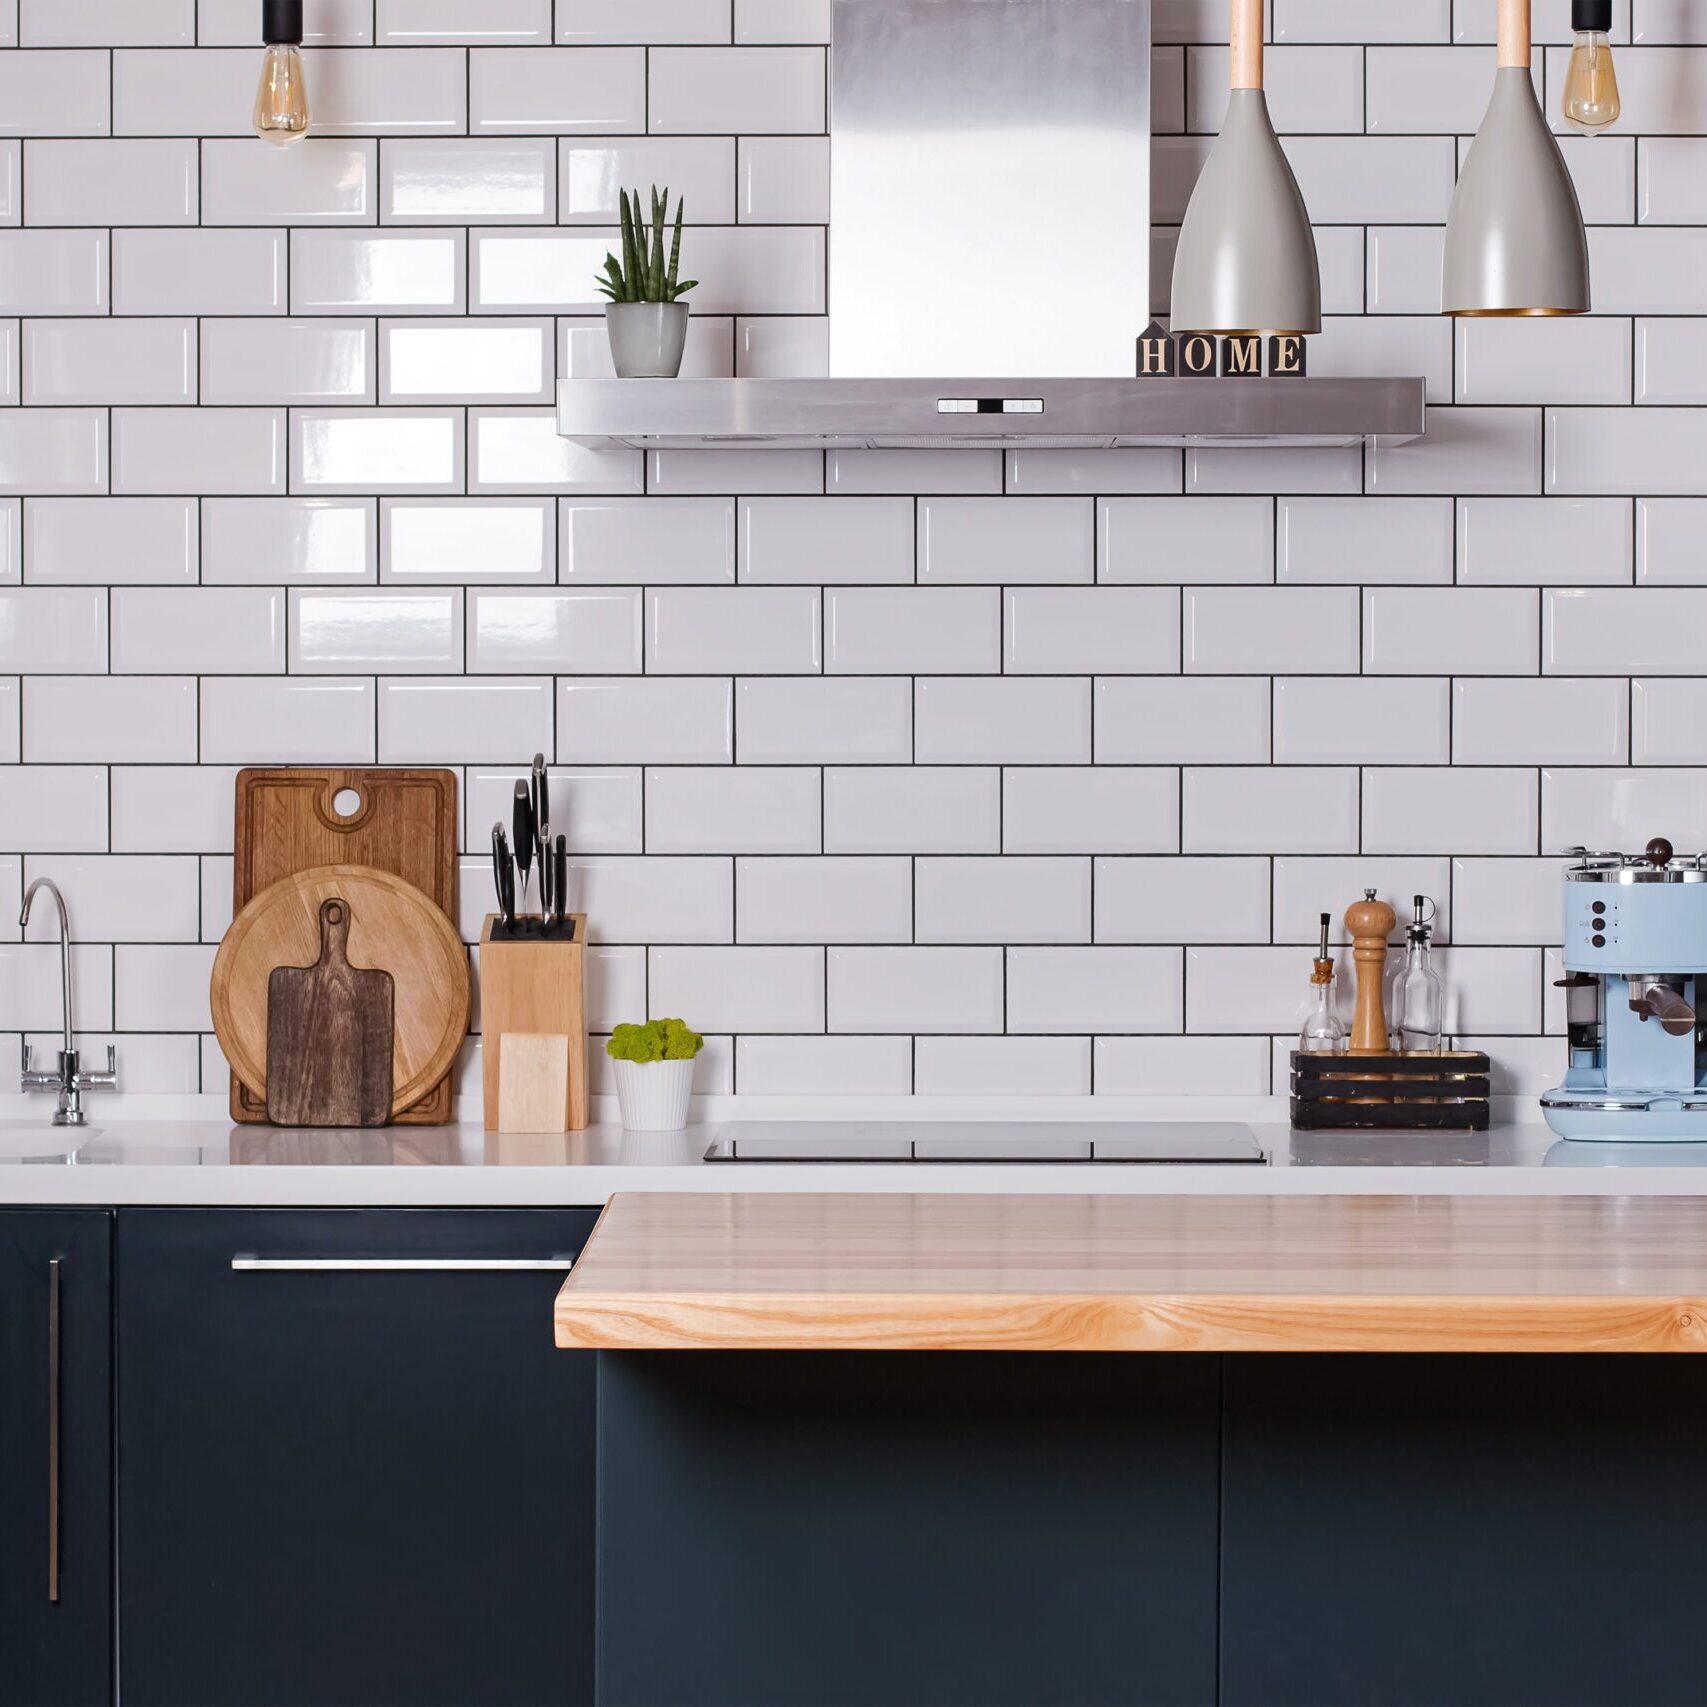 Modern interior design. Photo of kitchen with white tiles and dark furniture